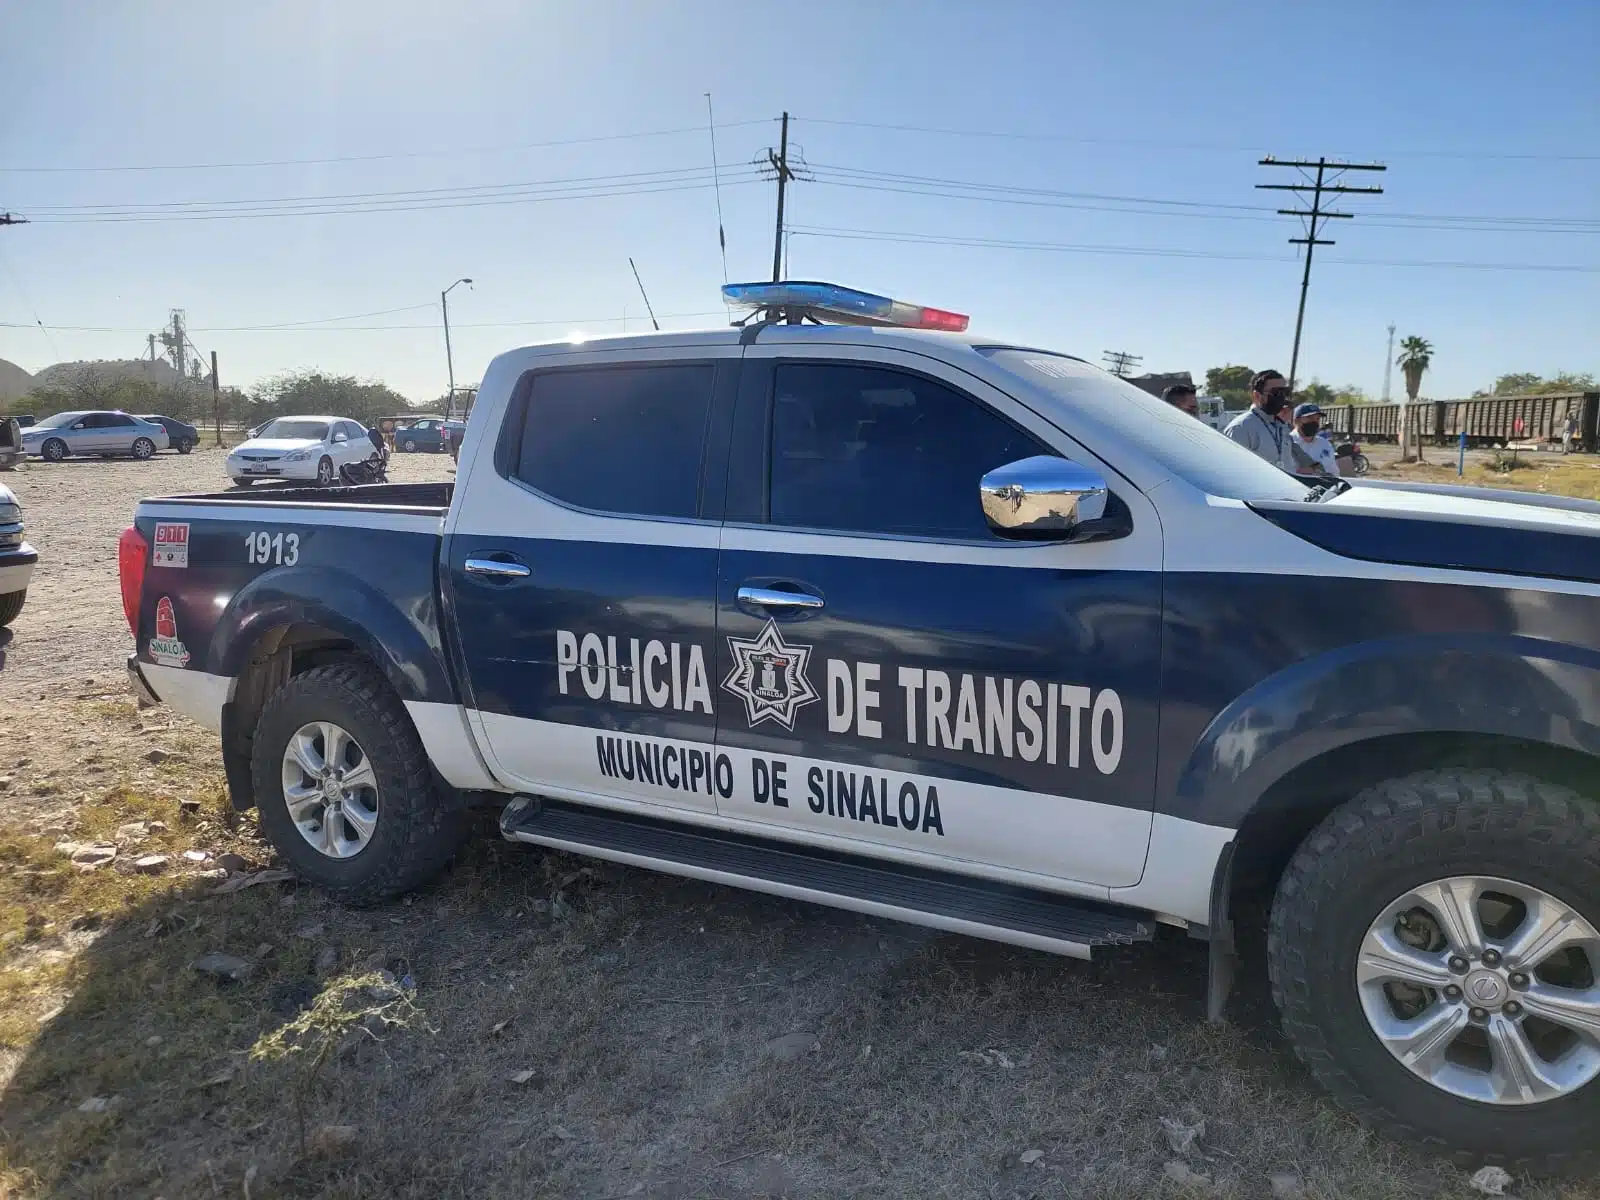 Policía-tránsito-Municipio de Sinaloa